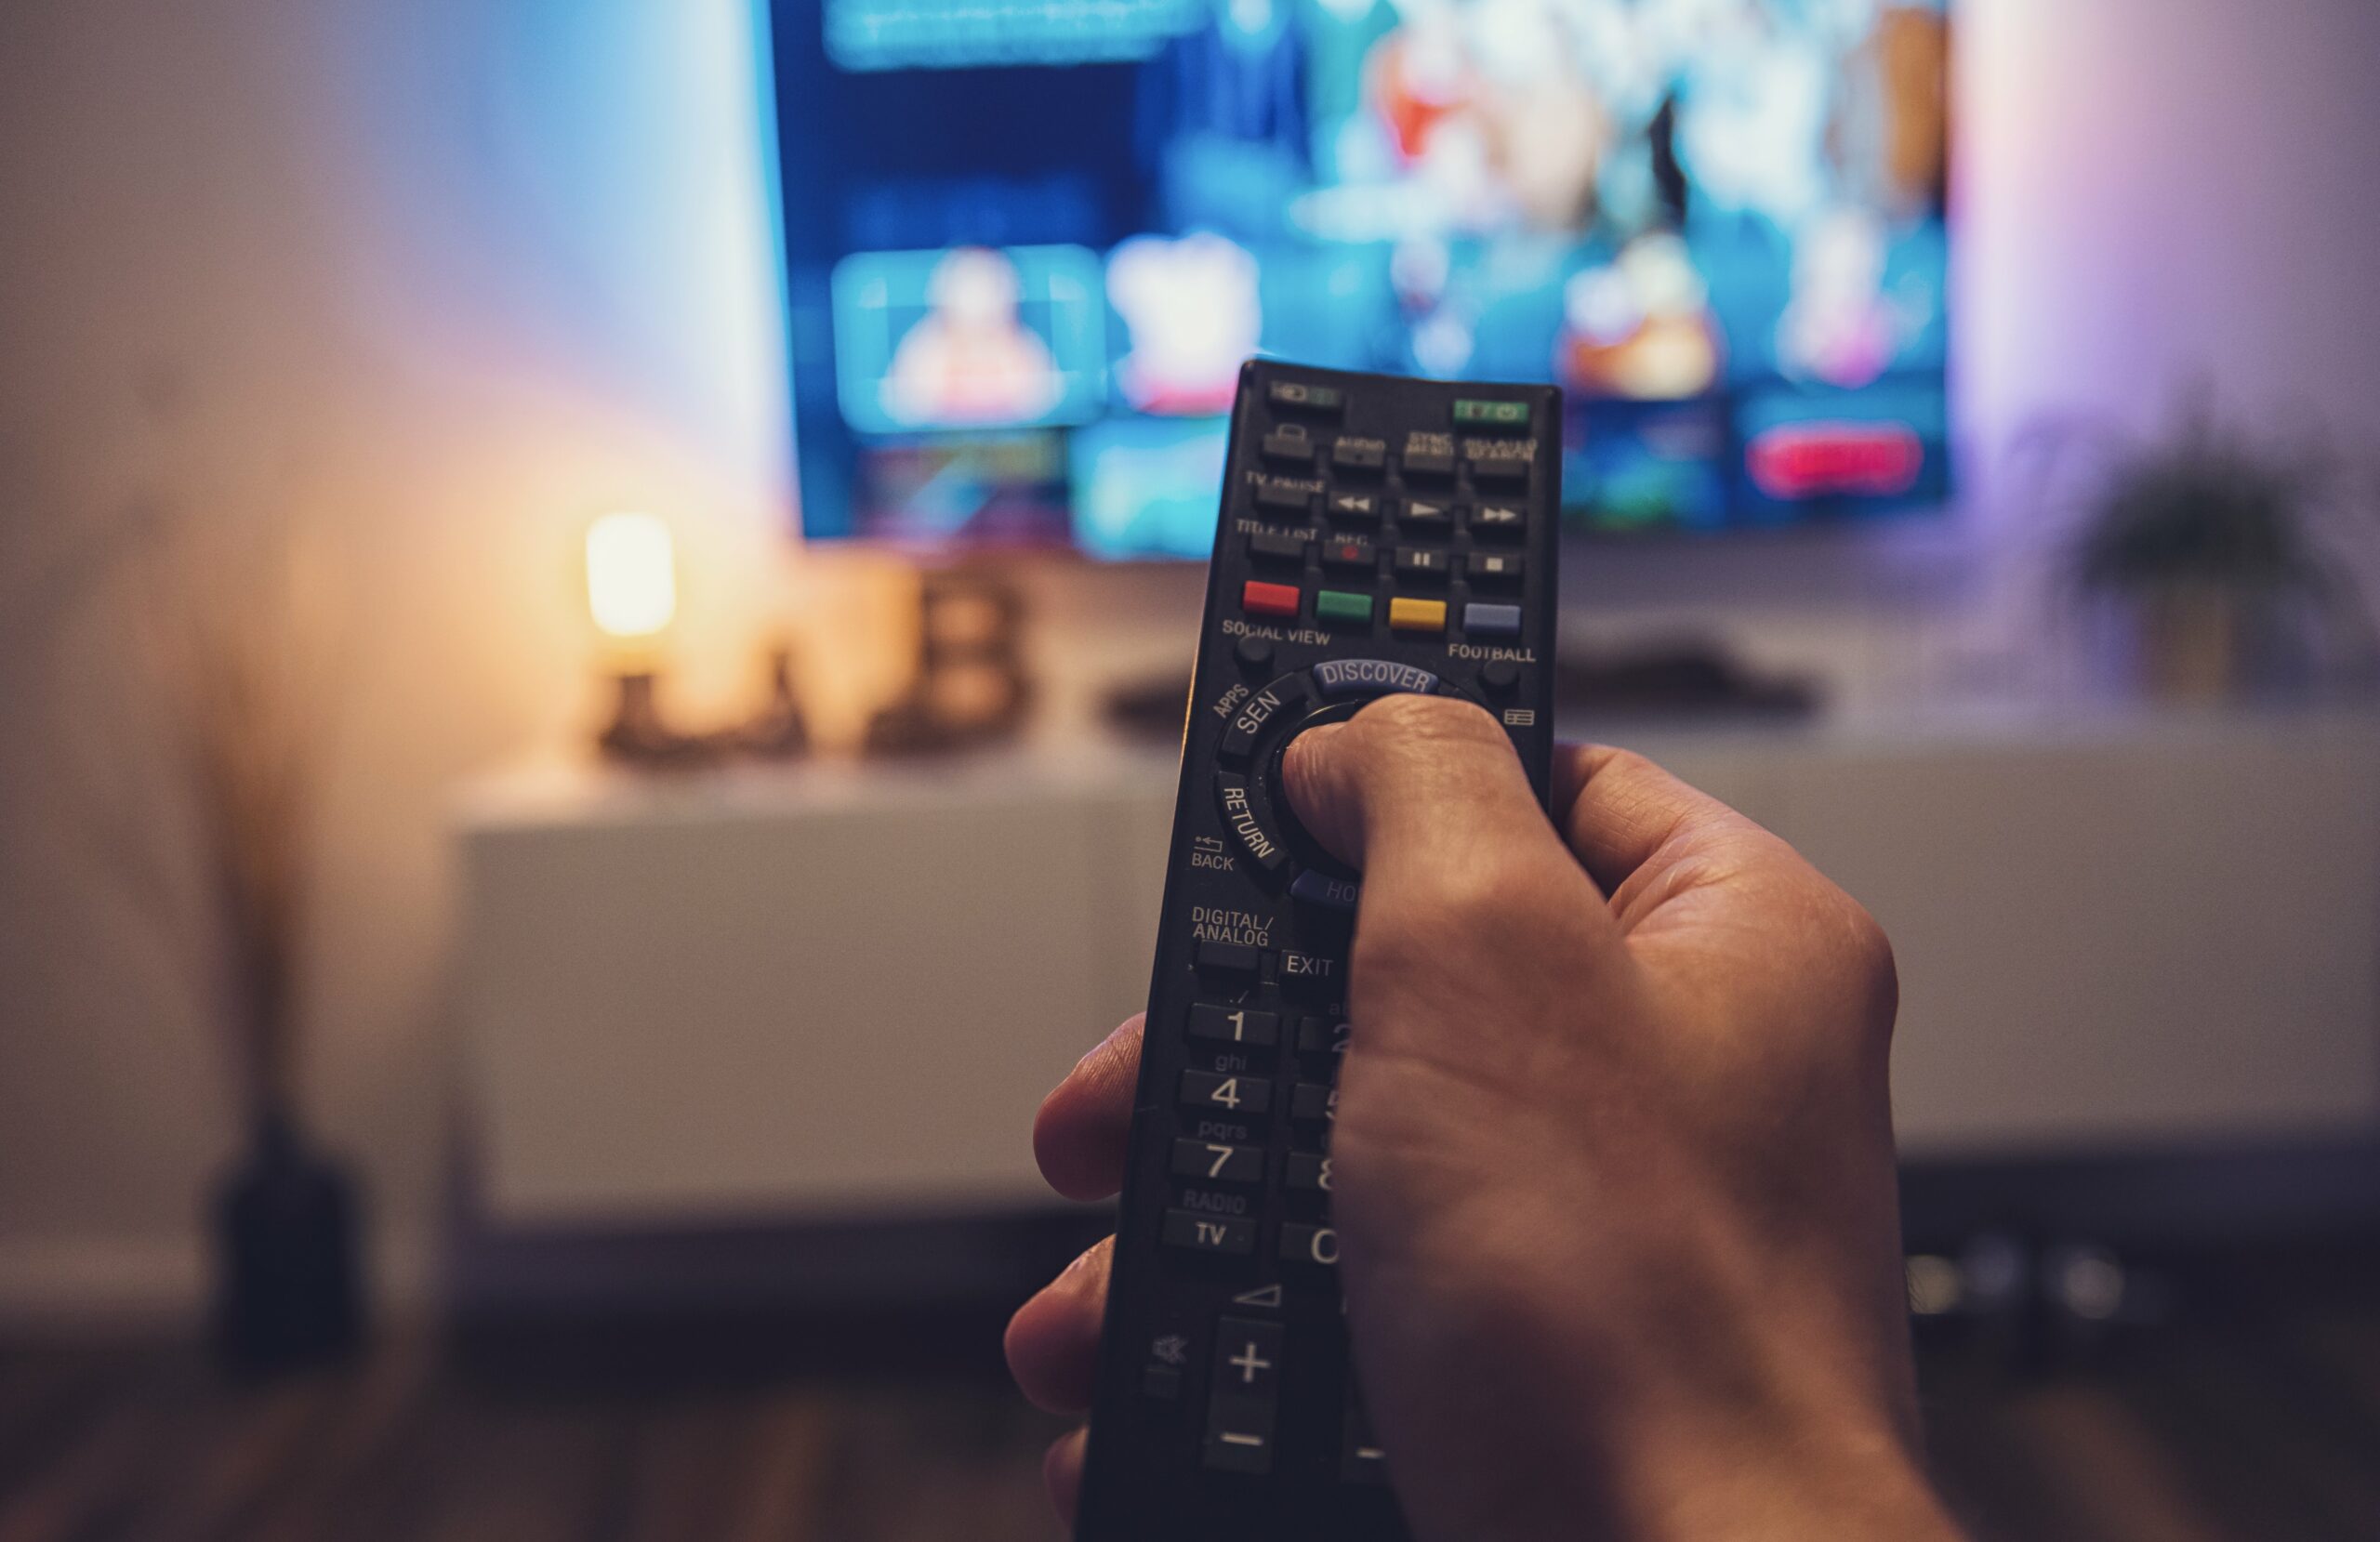 Market Segmentation and the evolution of Traditional Media: Television